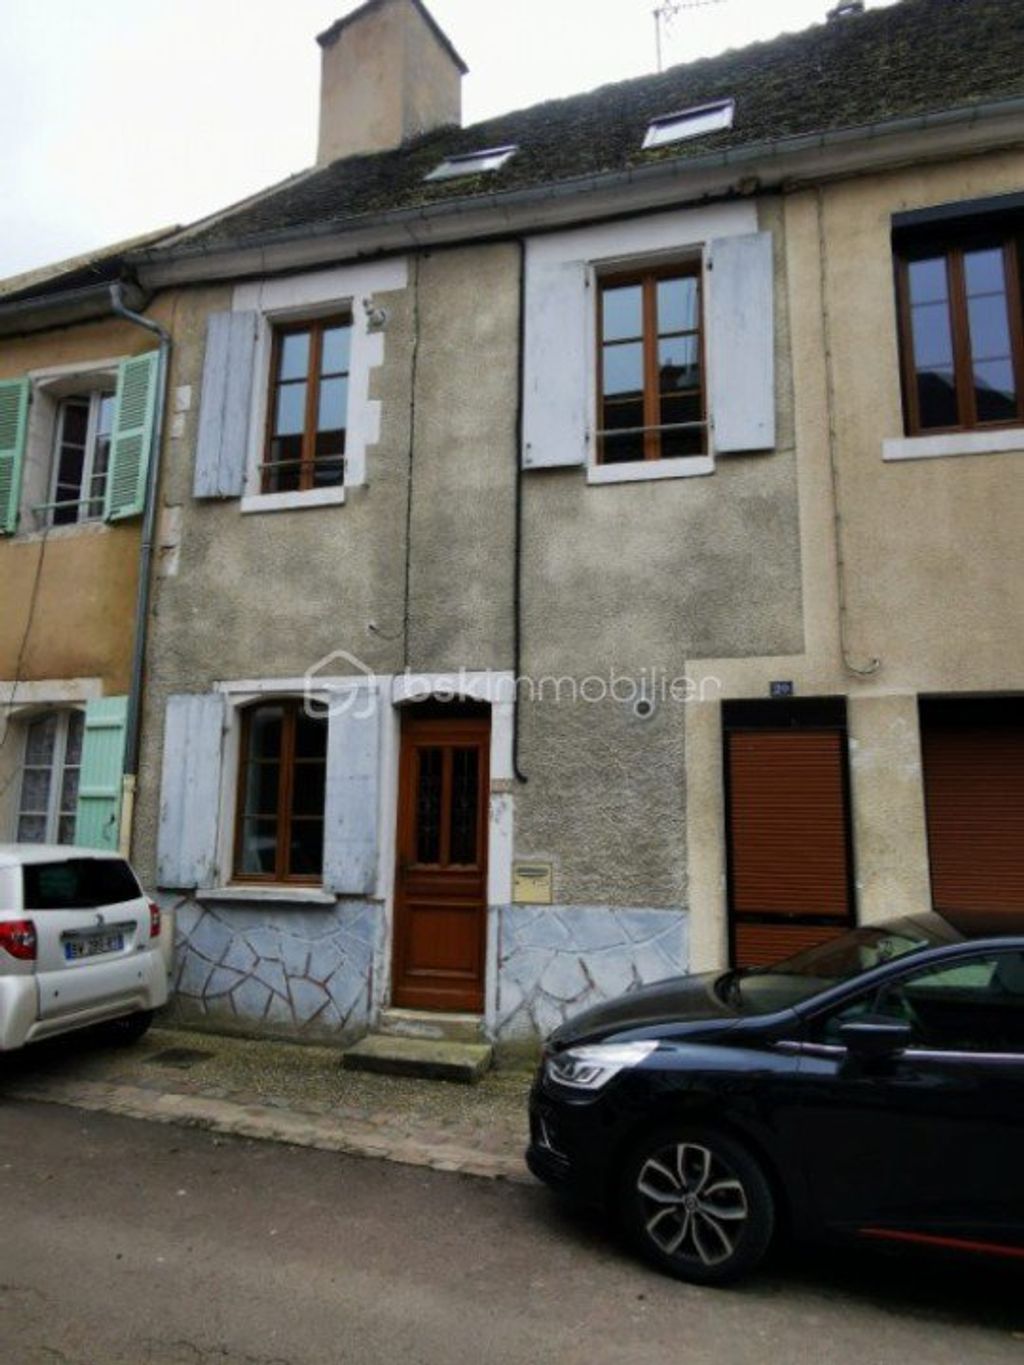 Achat maison à vendre 3 chambres 64 m² - Sainte-Pallaye